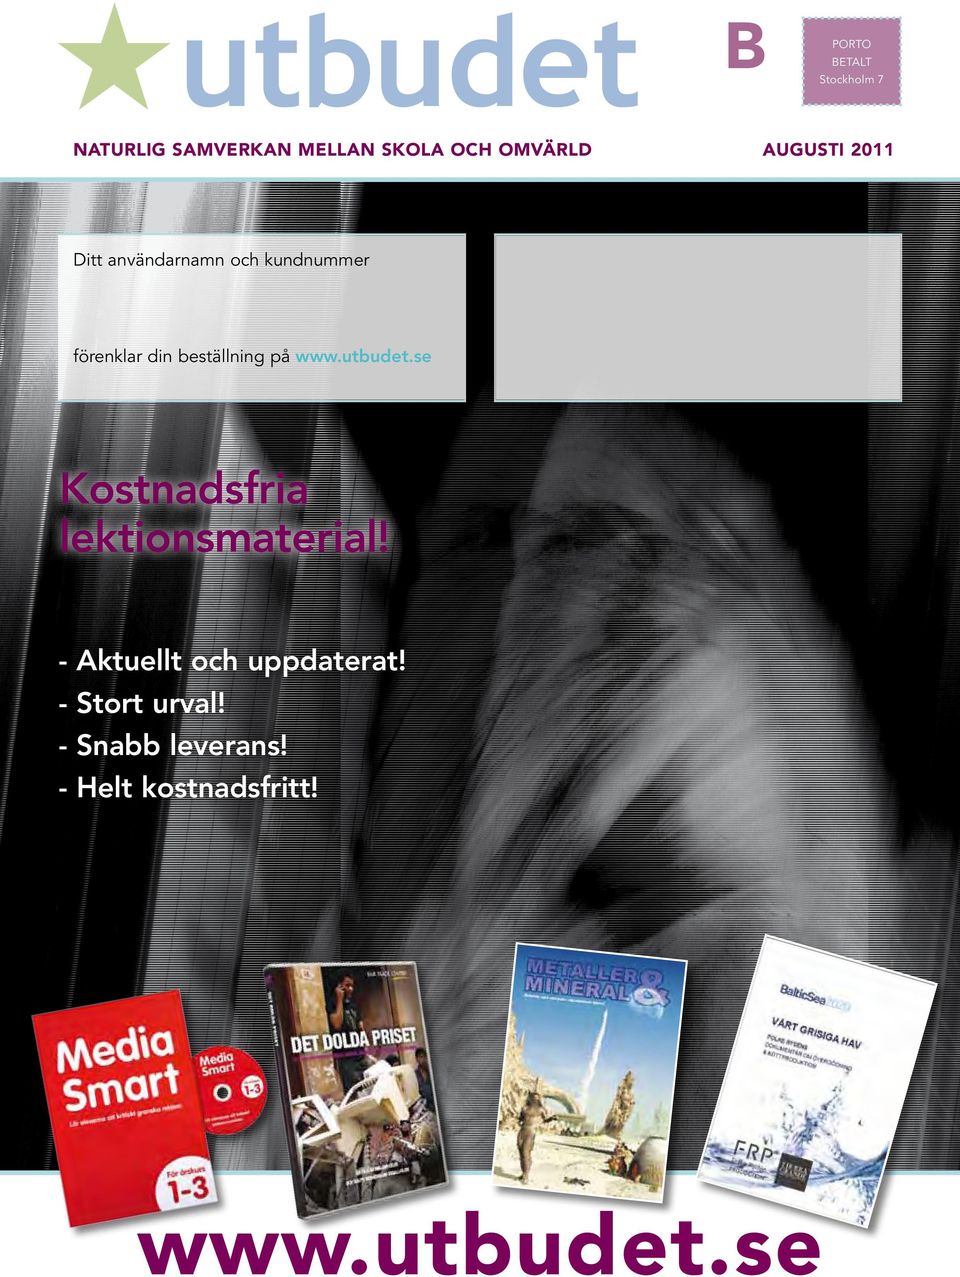 på www.utbudet.se Kostnadsfria lektionsmaterial!